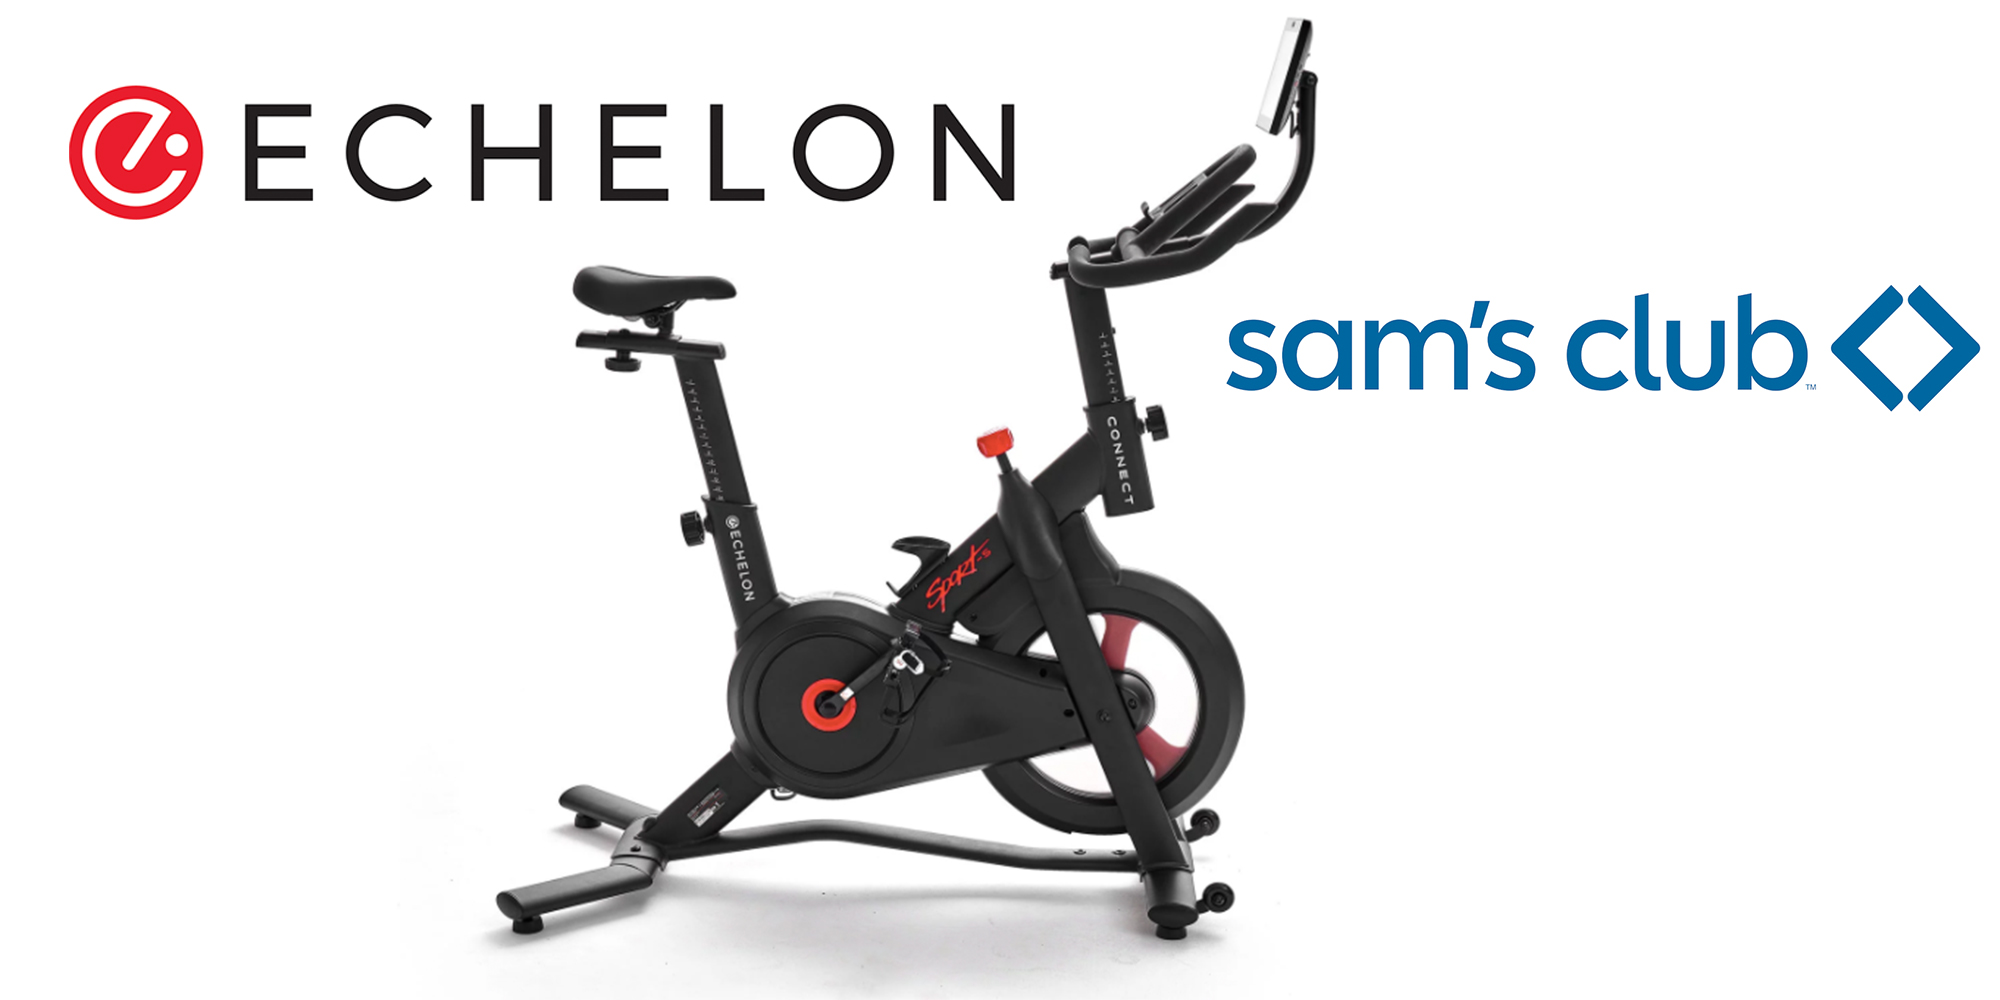 Echelon unveils bike exclusive to Sam's Club